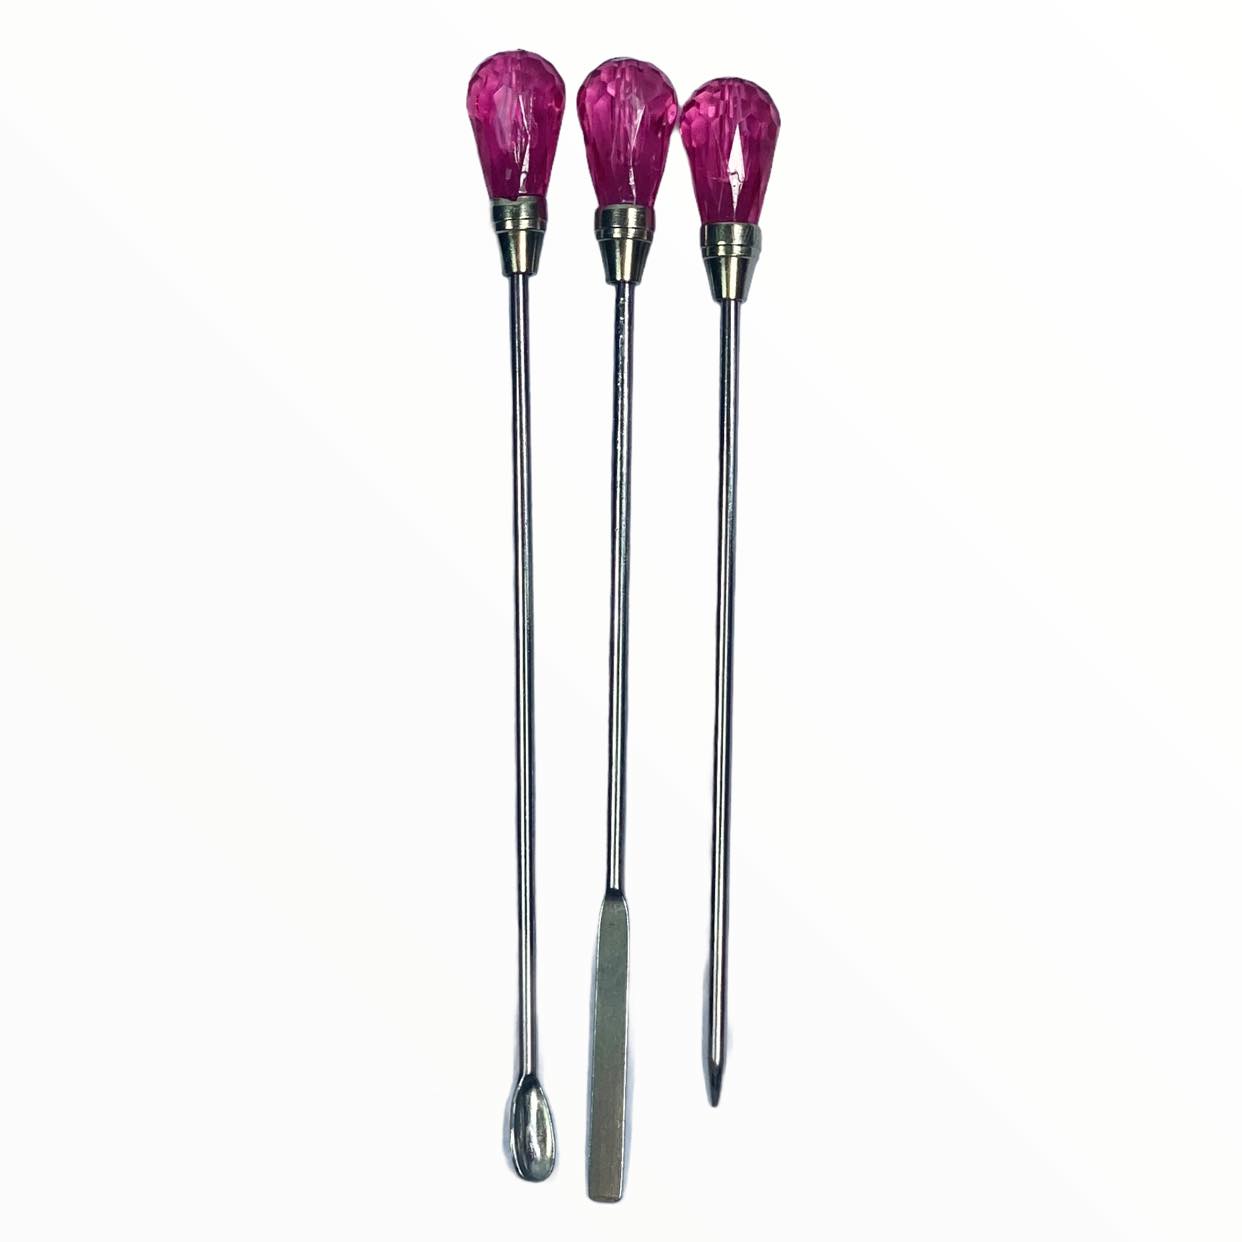 Spoon, Spatula, Needle 3 Piece Nail Tool Set